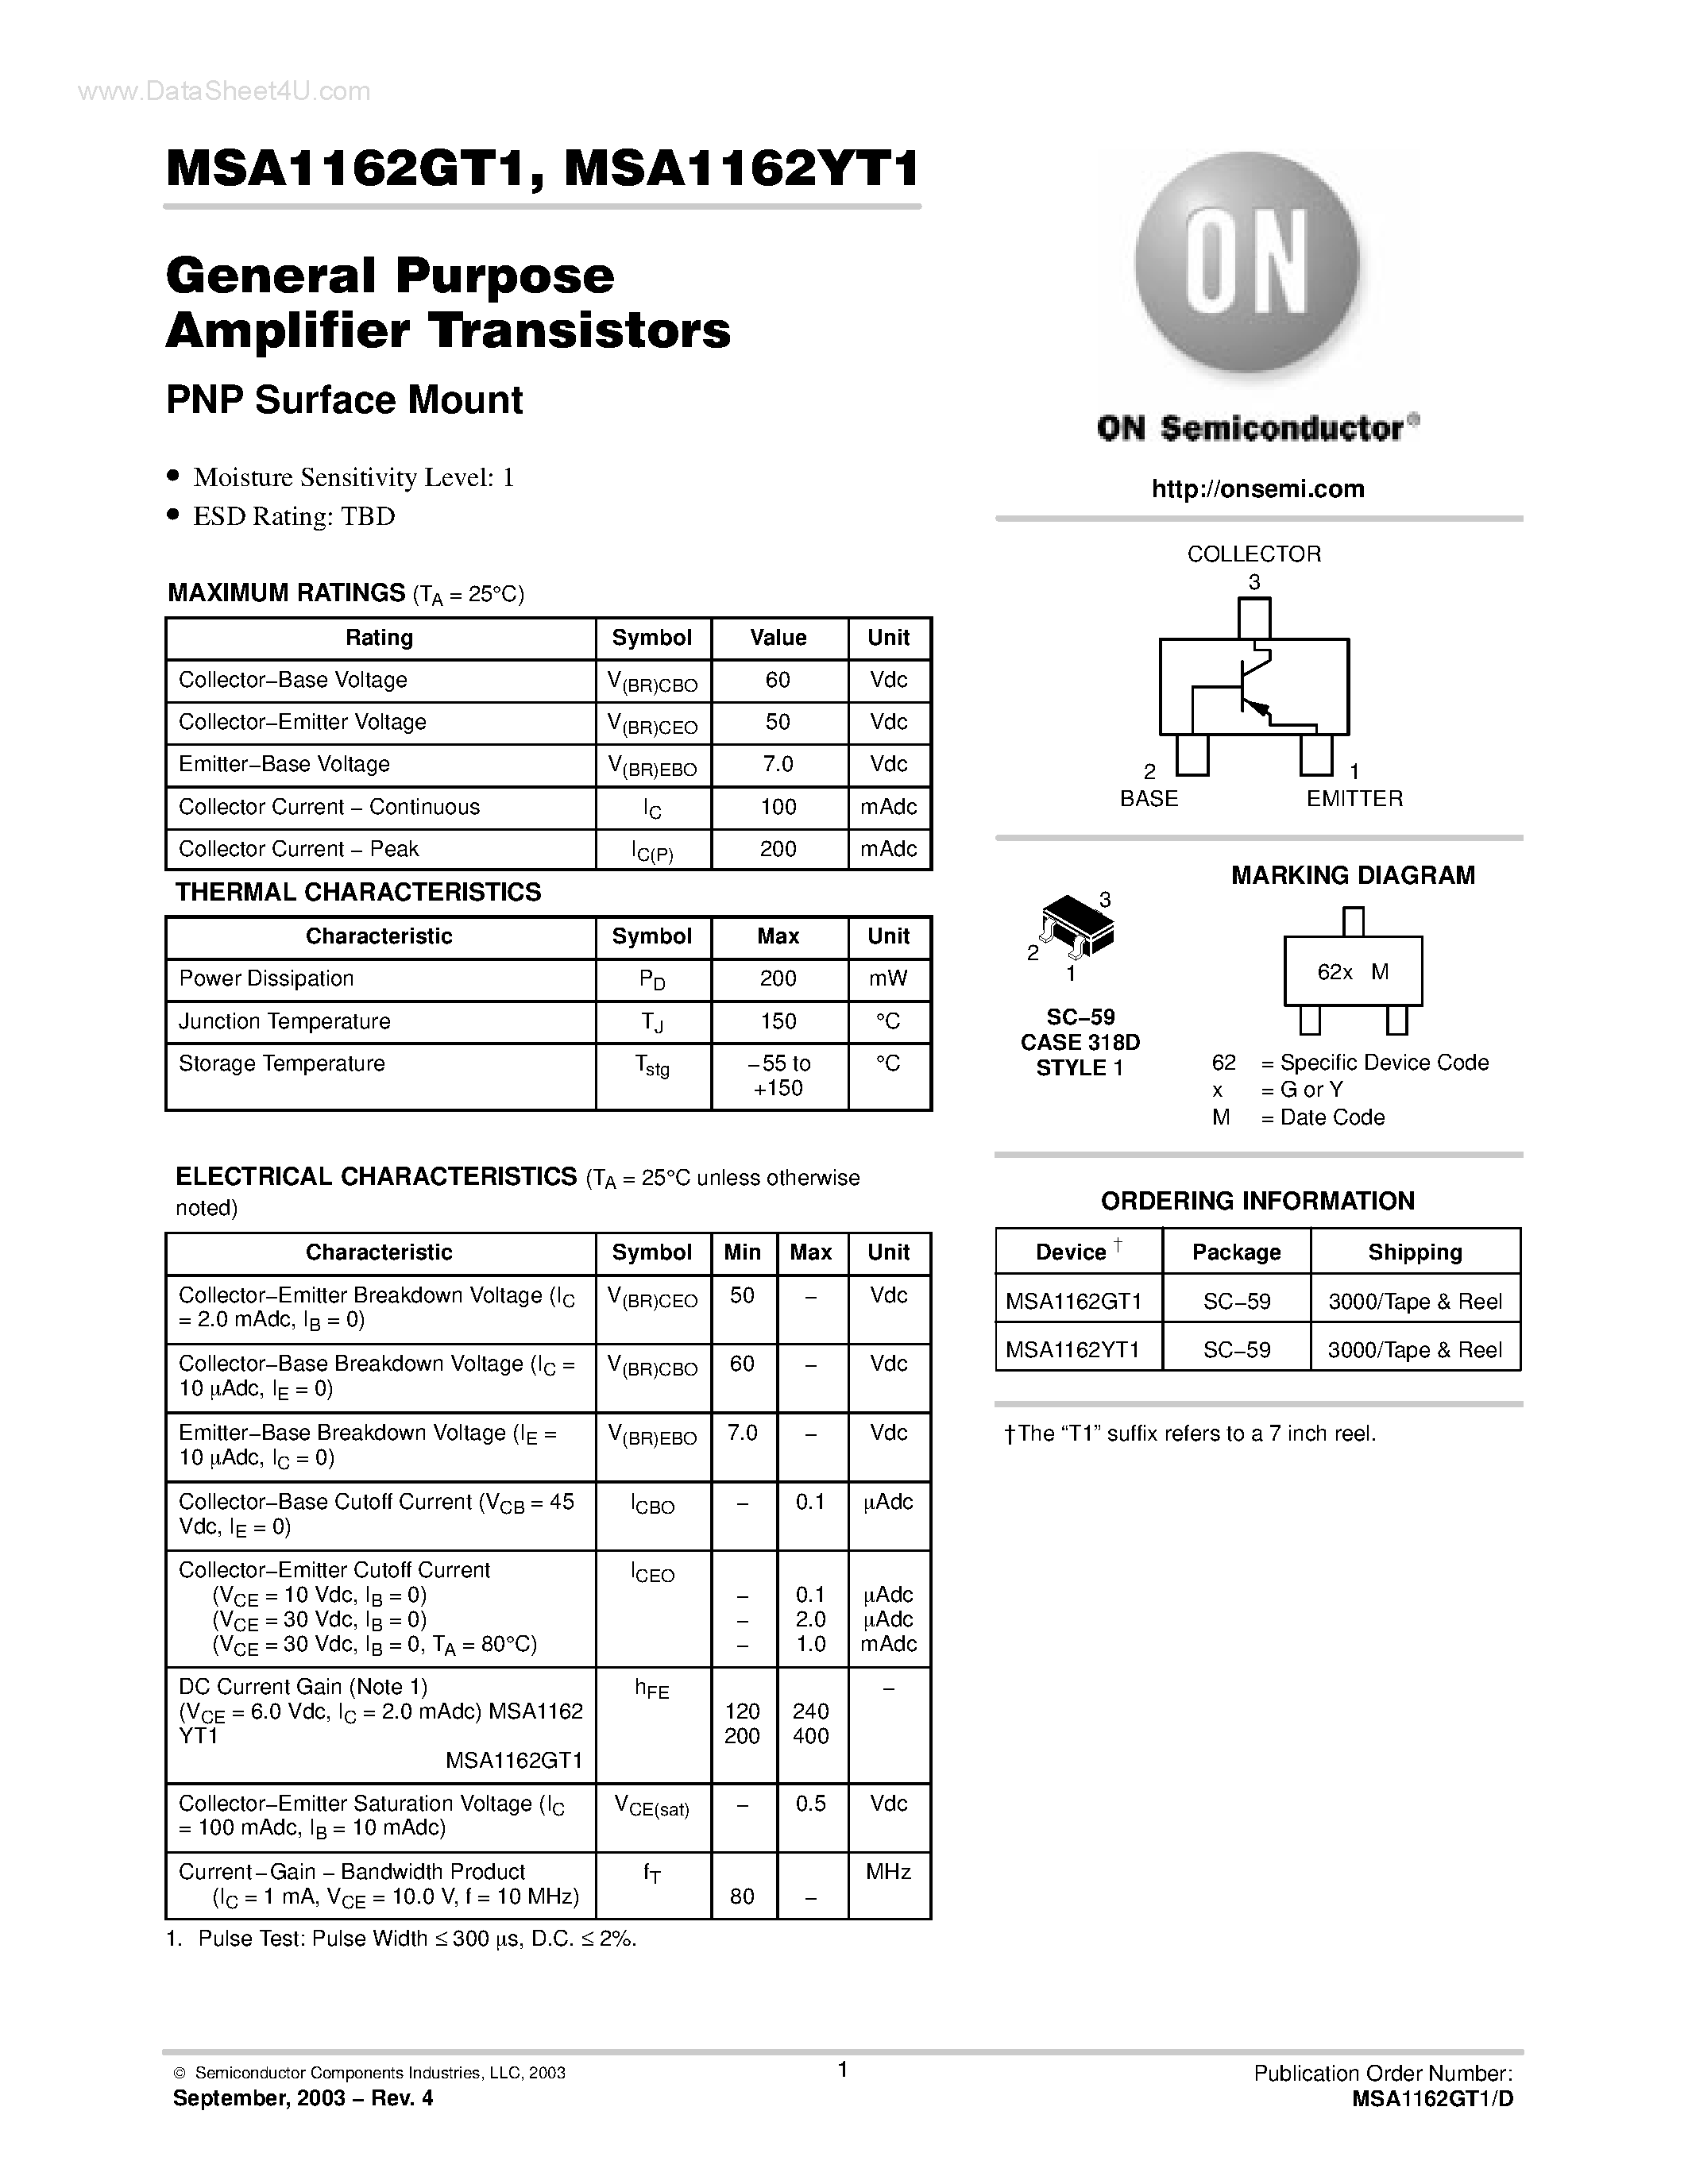 Даташит MSA1162GT1 - (MSA1162GT1 / MSA1162YT1) General Purpose Amplifier Transistors страница 1